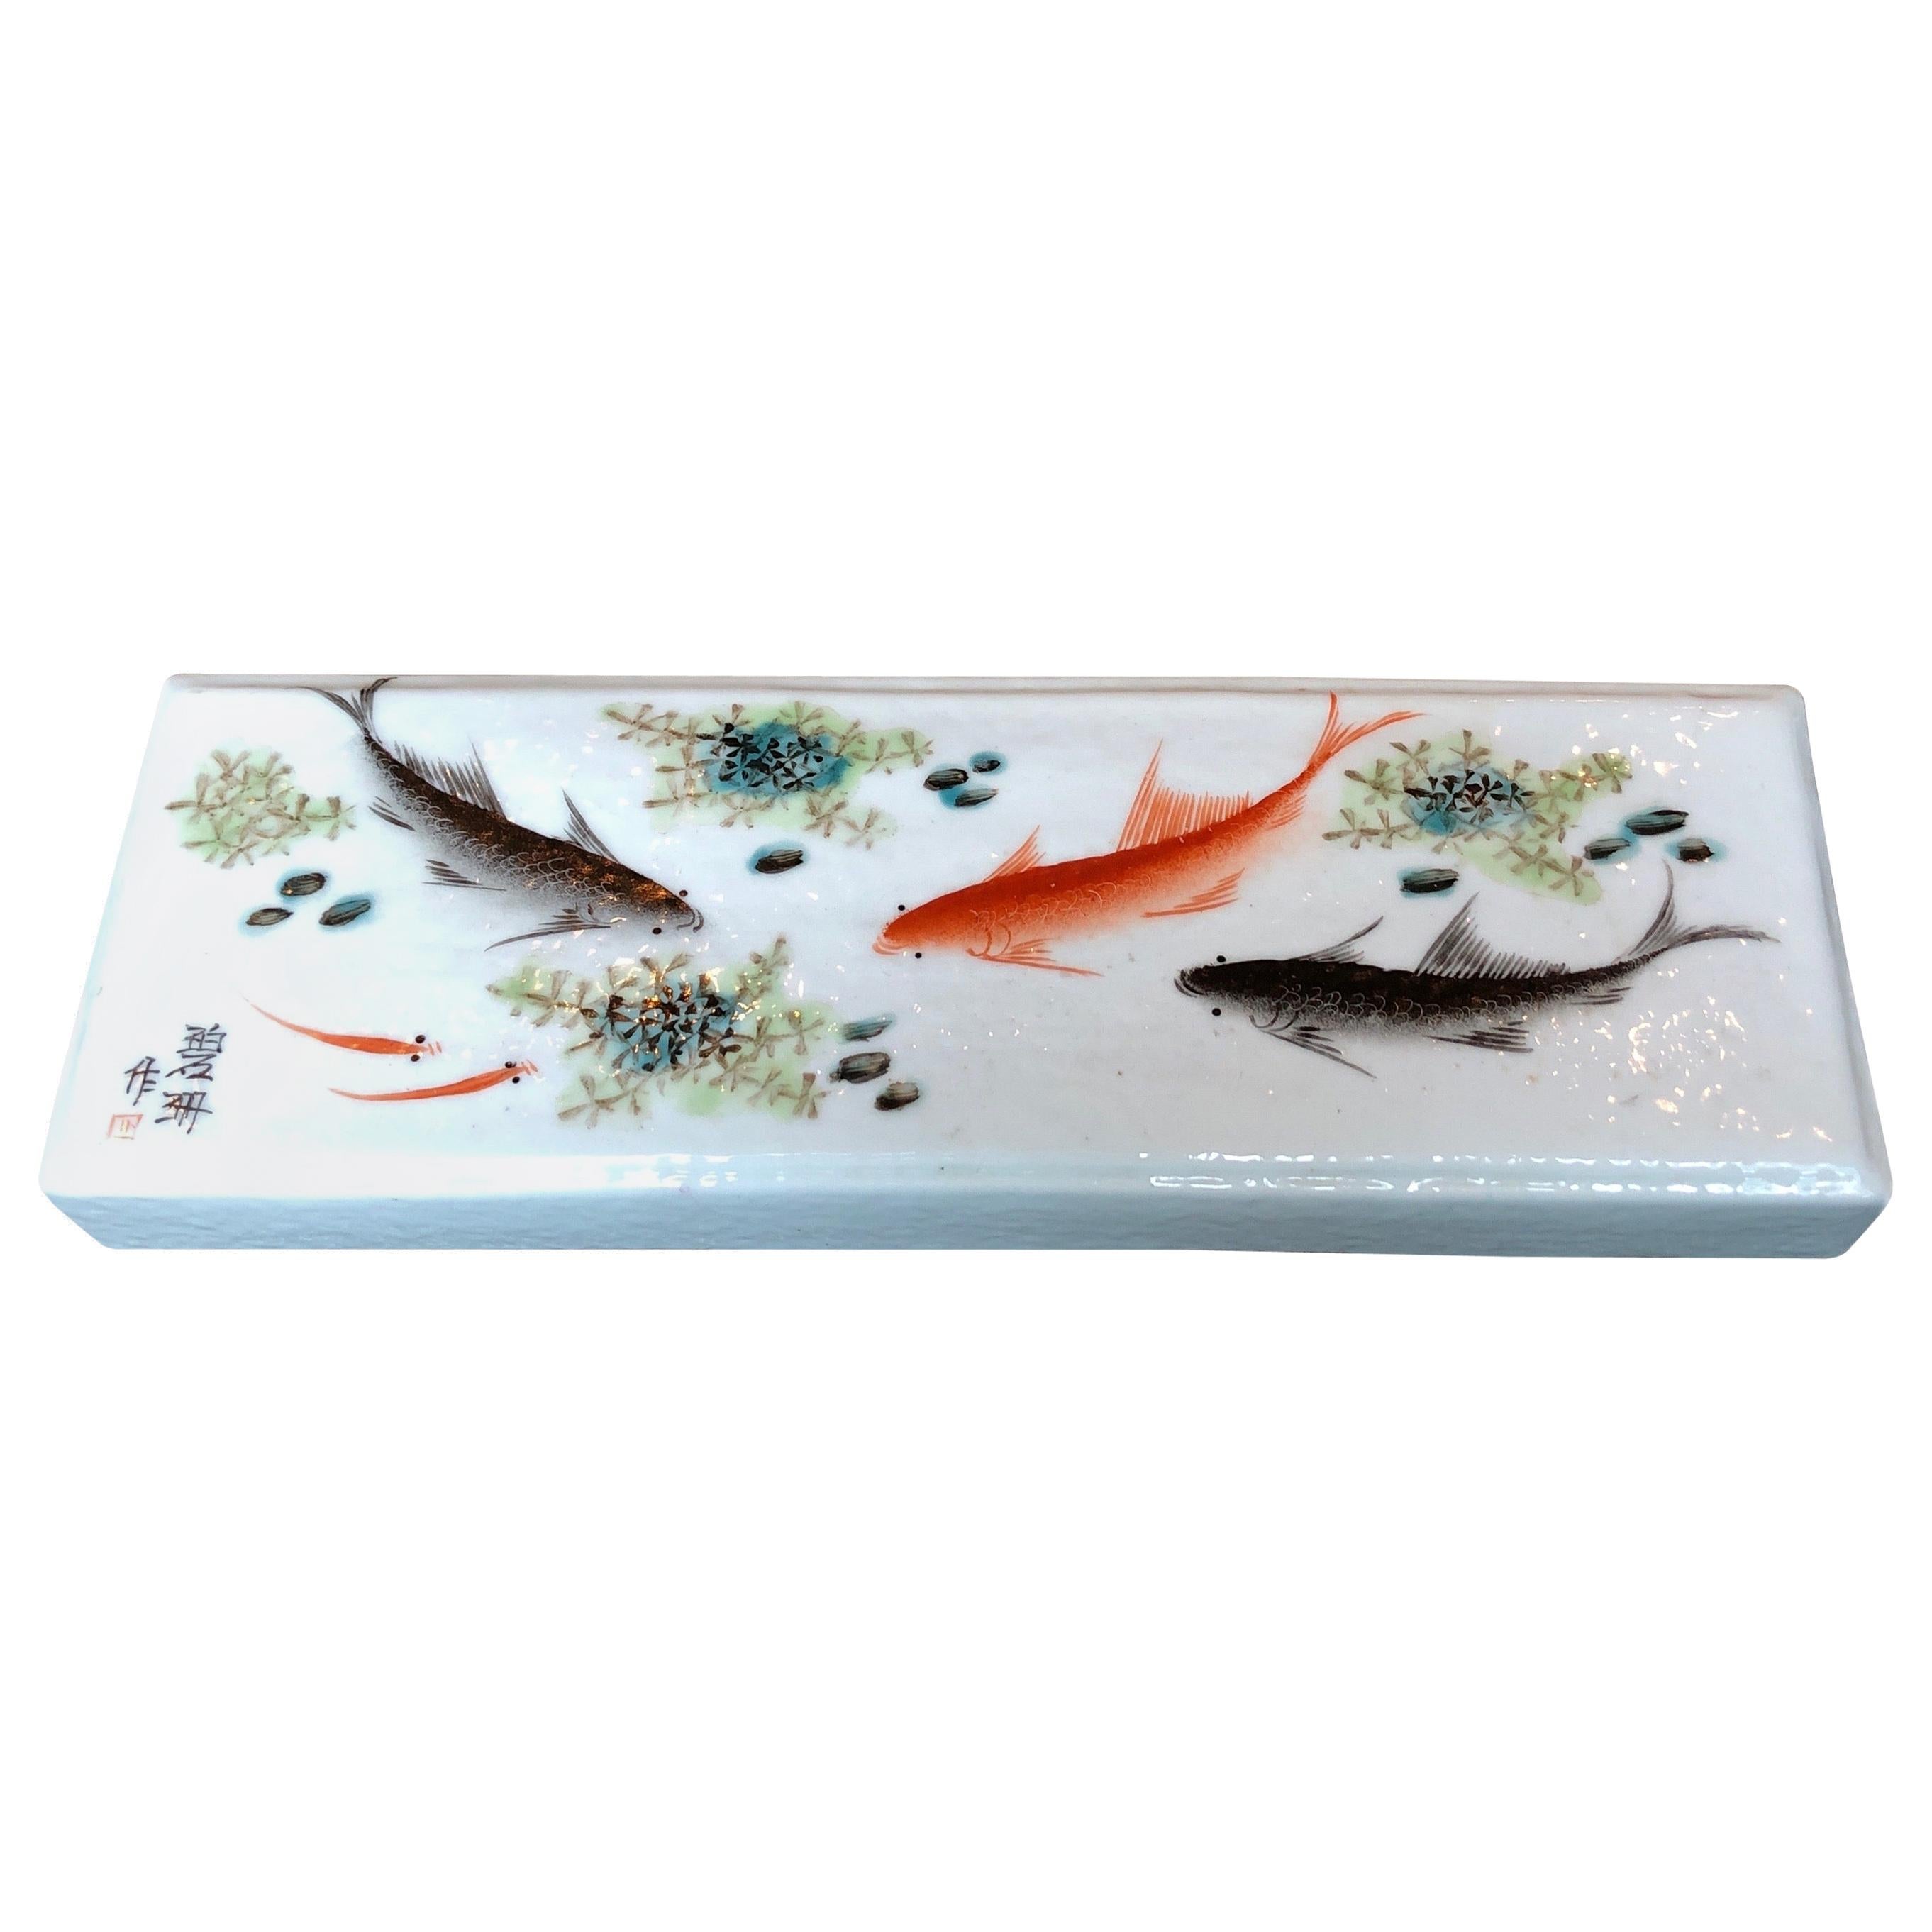 Porcelain Brush Rest with Vivid Fish Images